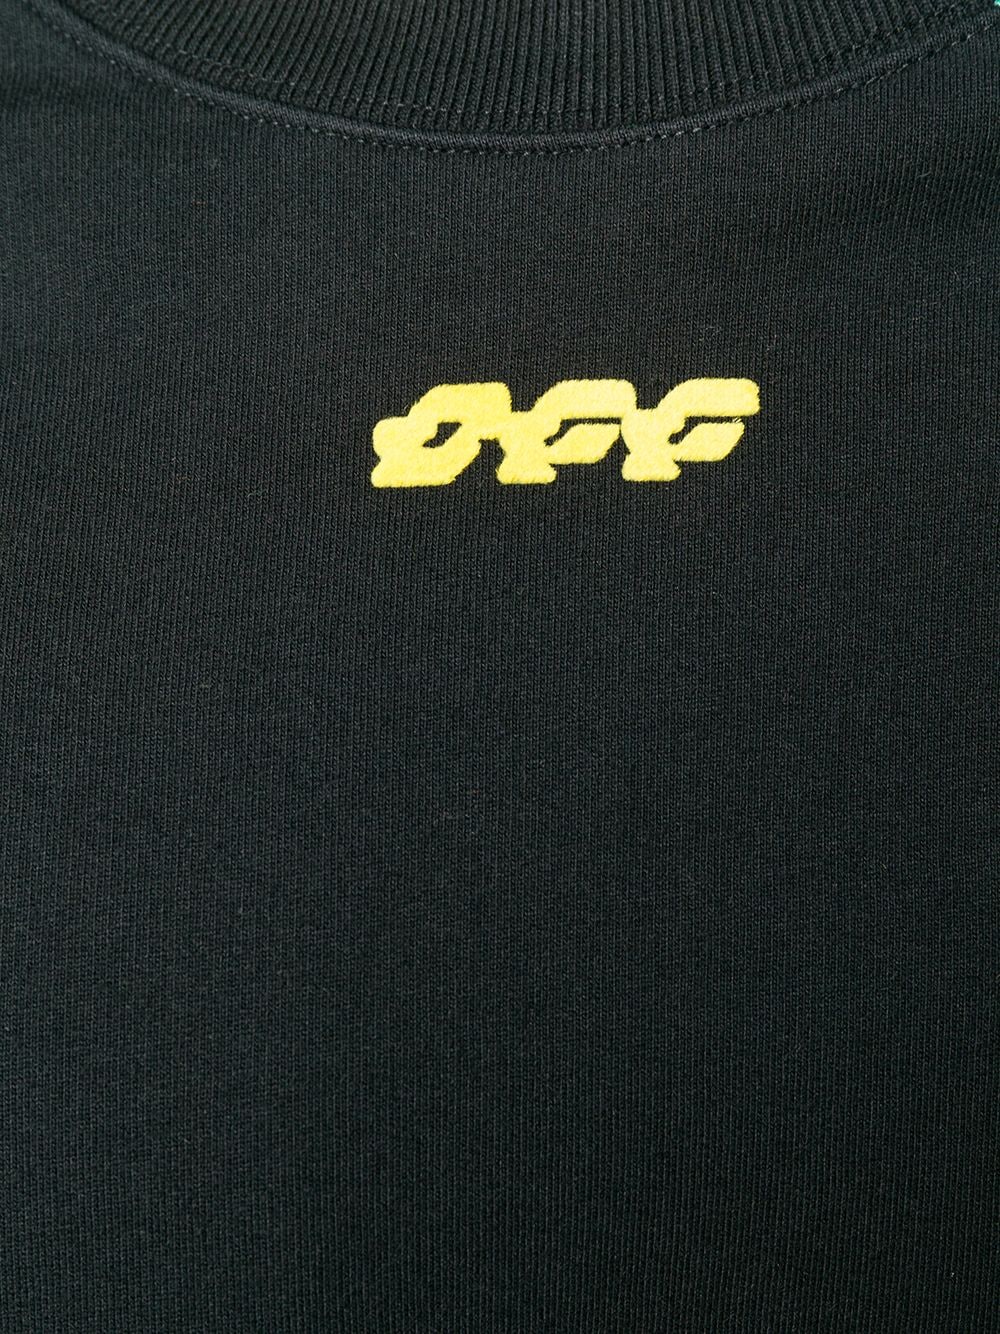 Off-White Disrupted Font Crew Neck Sweatshirt - Farfetch